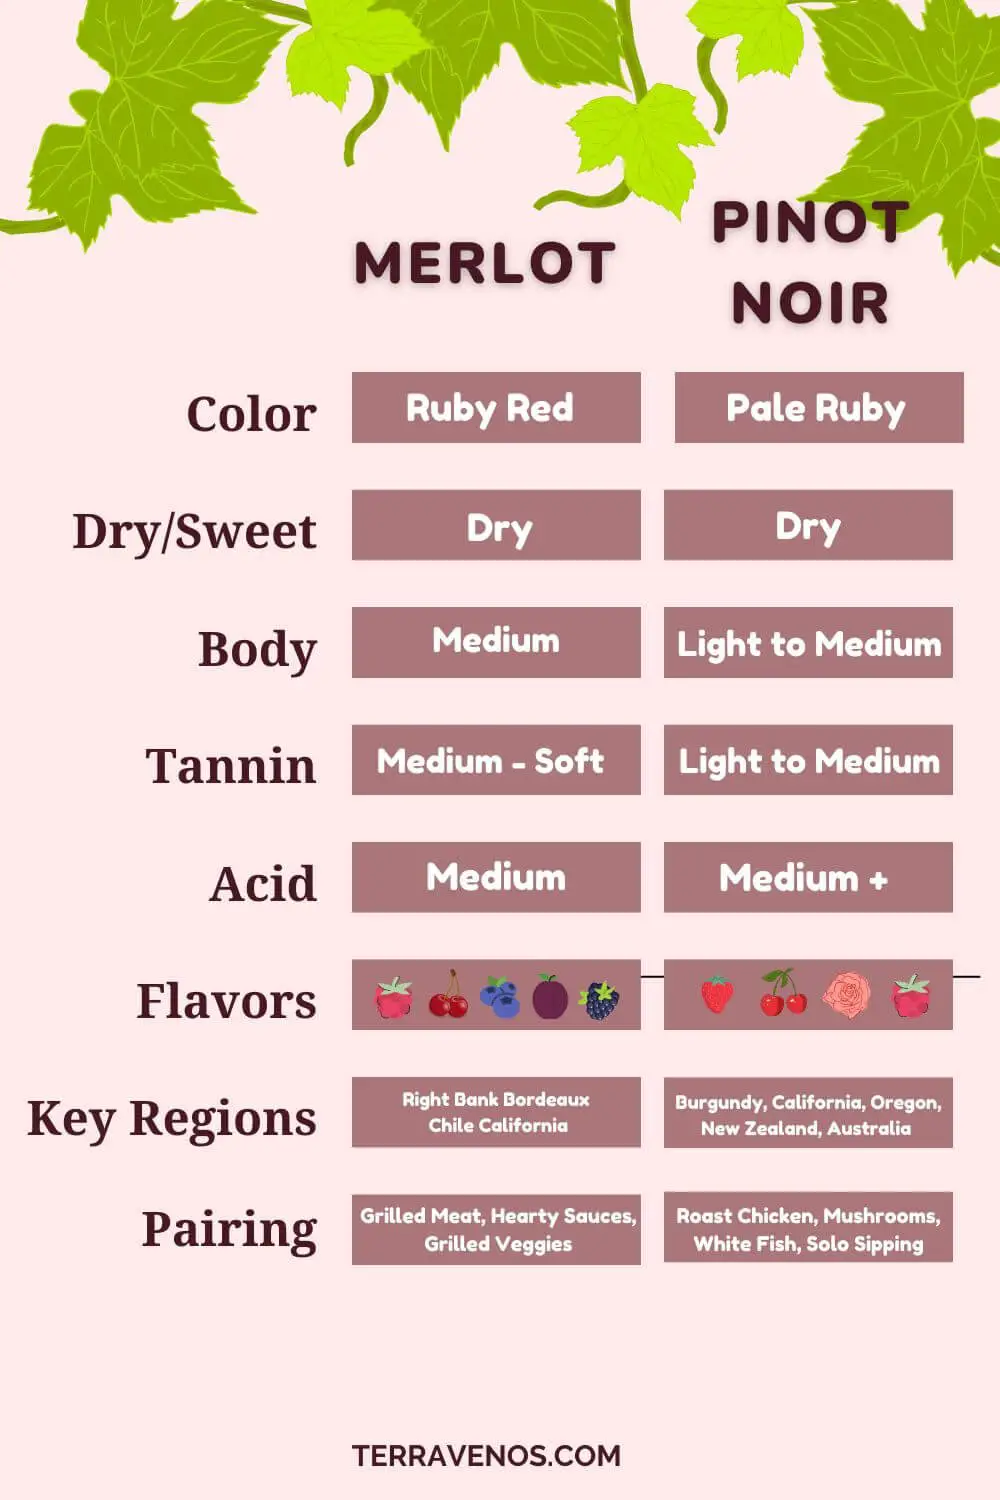 pinot noir versus merlot -wine infographic